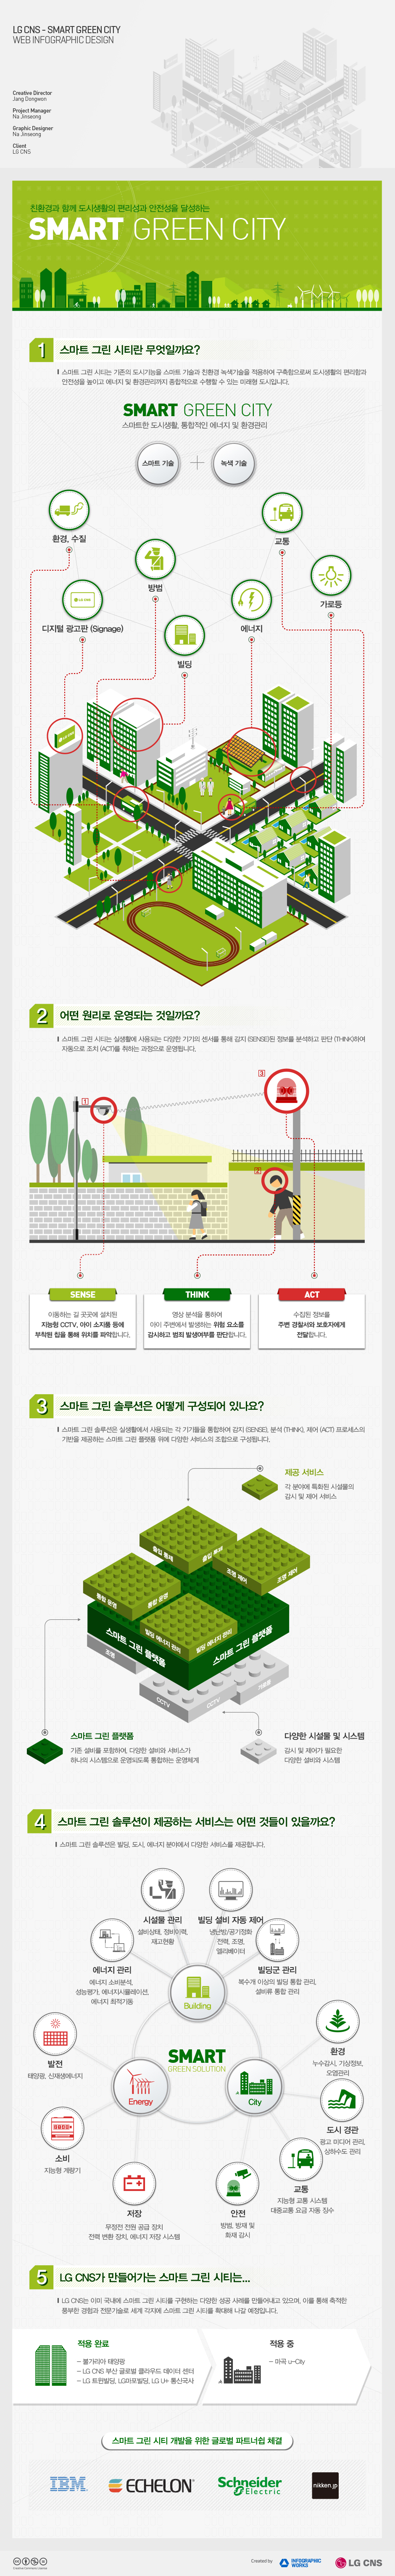 [LG CNS]Smart Green City